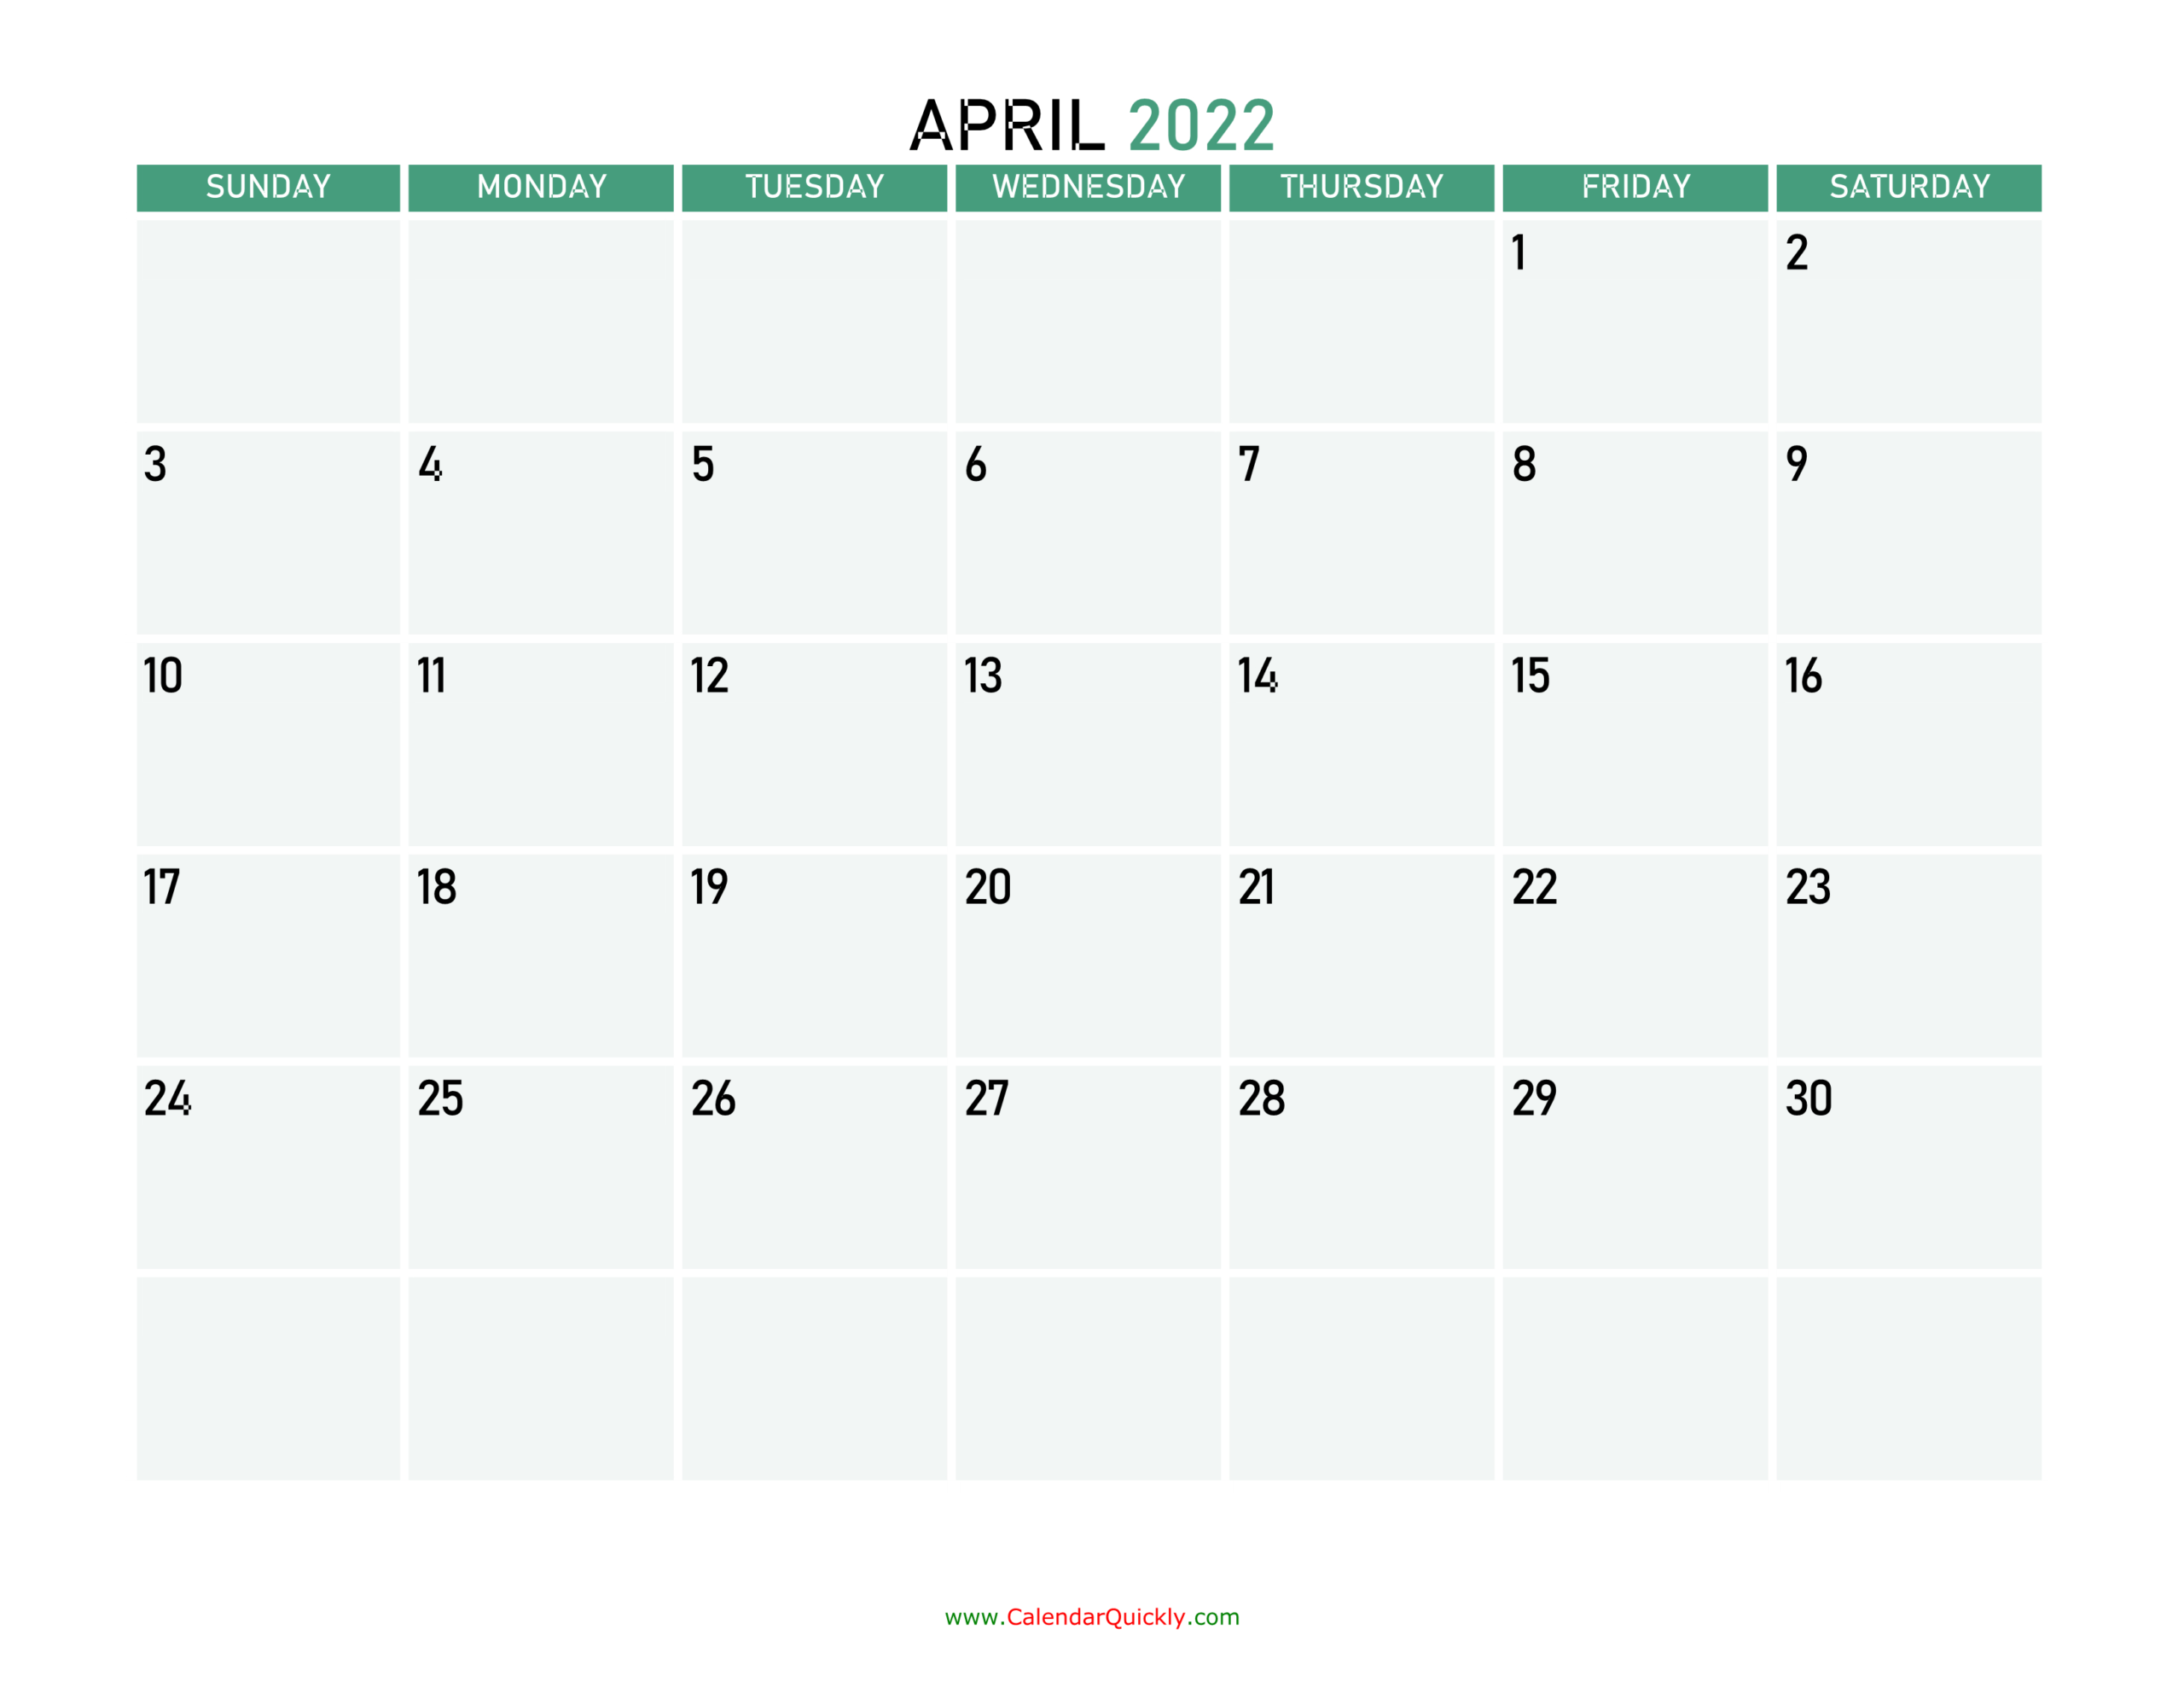 April 2022 Calendars | Calendar Quickly  Free Printable Calendar 2022 April